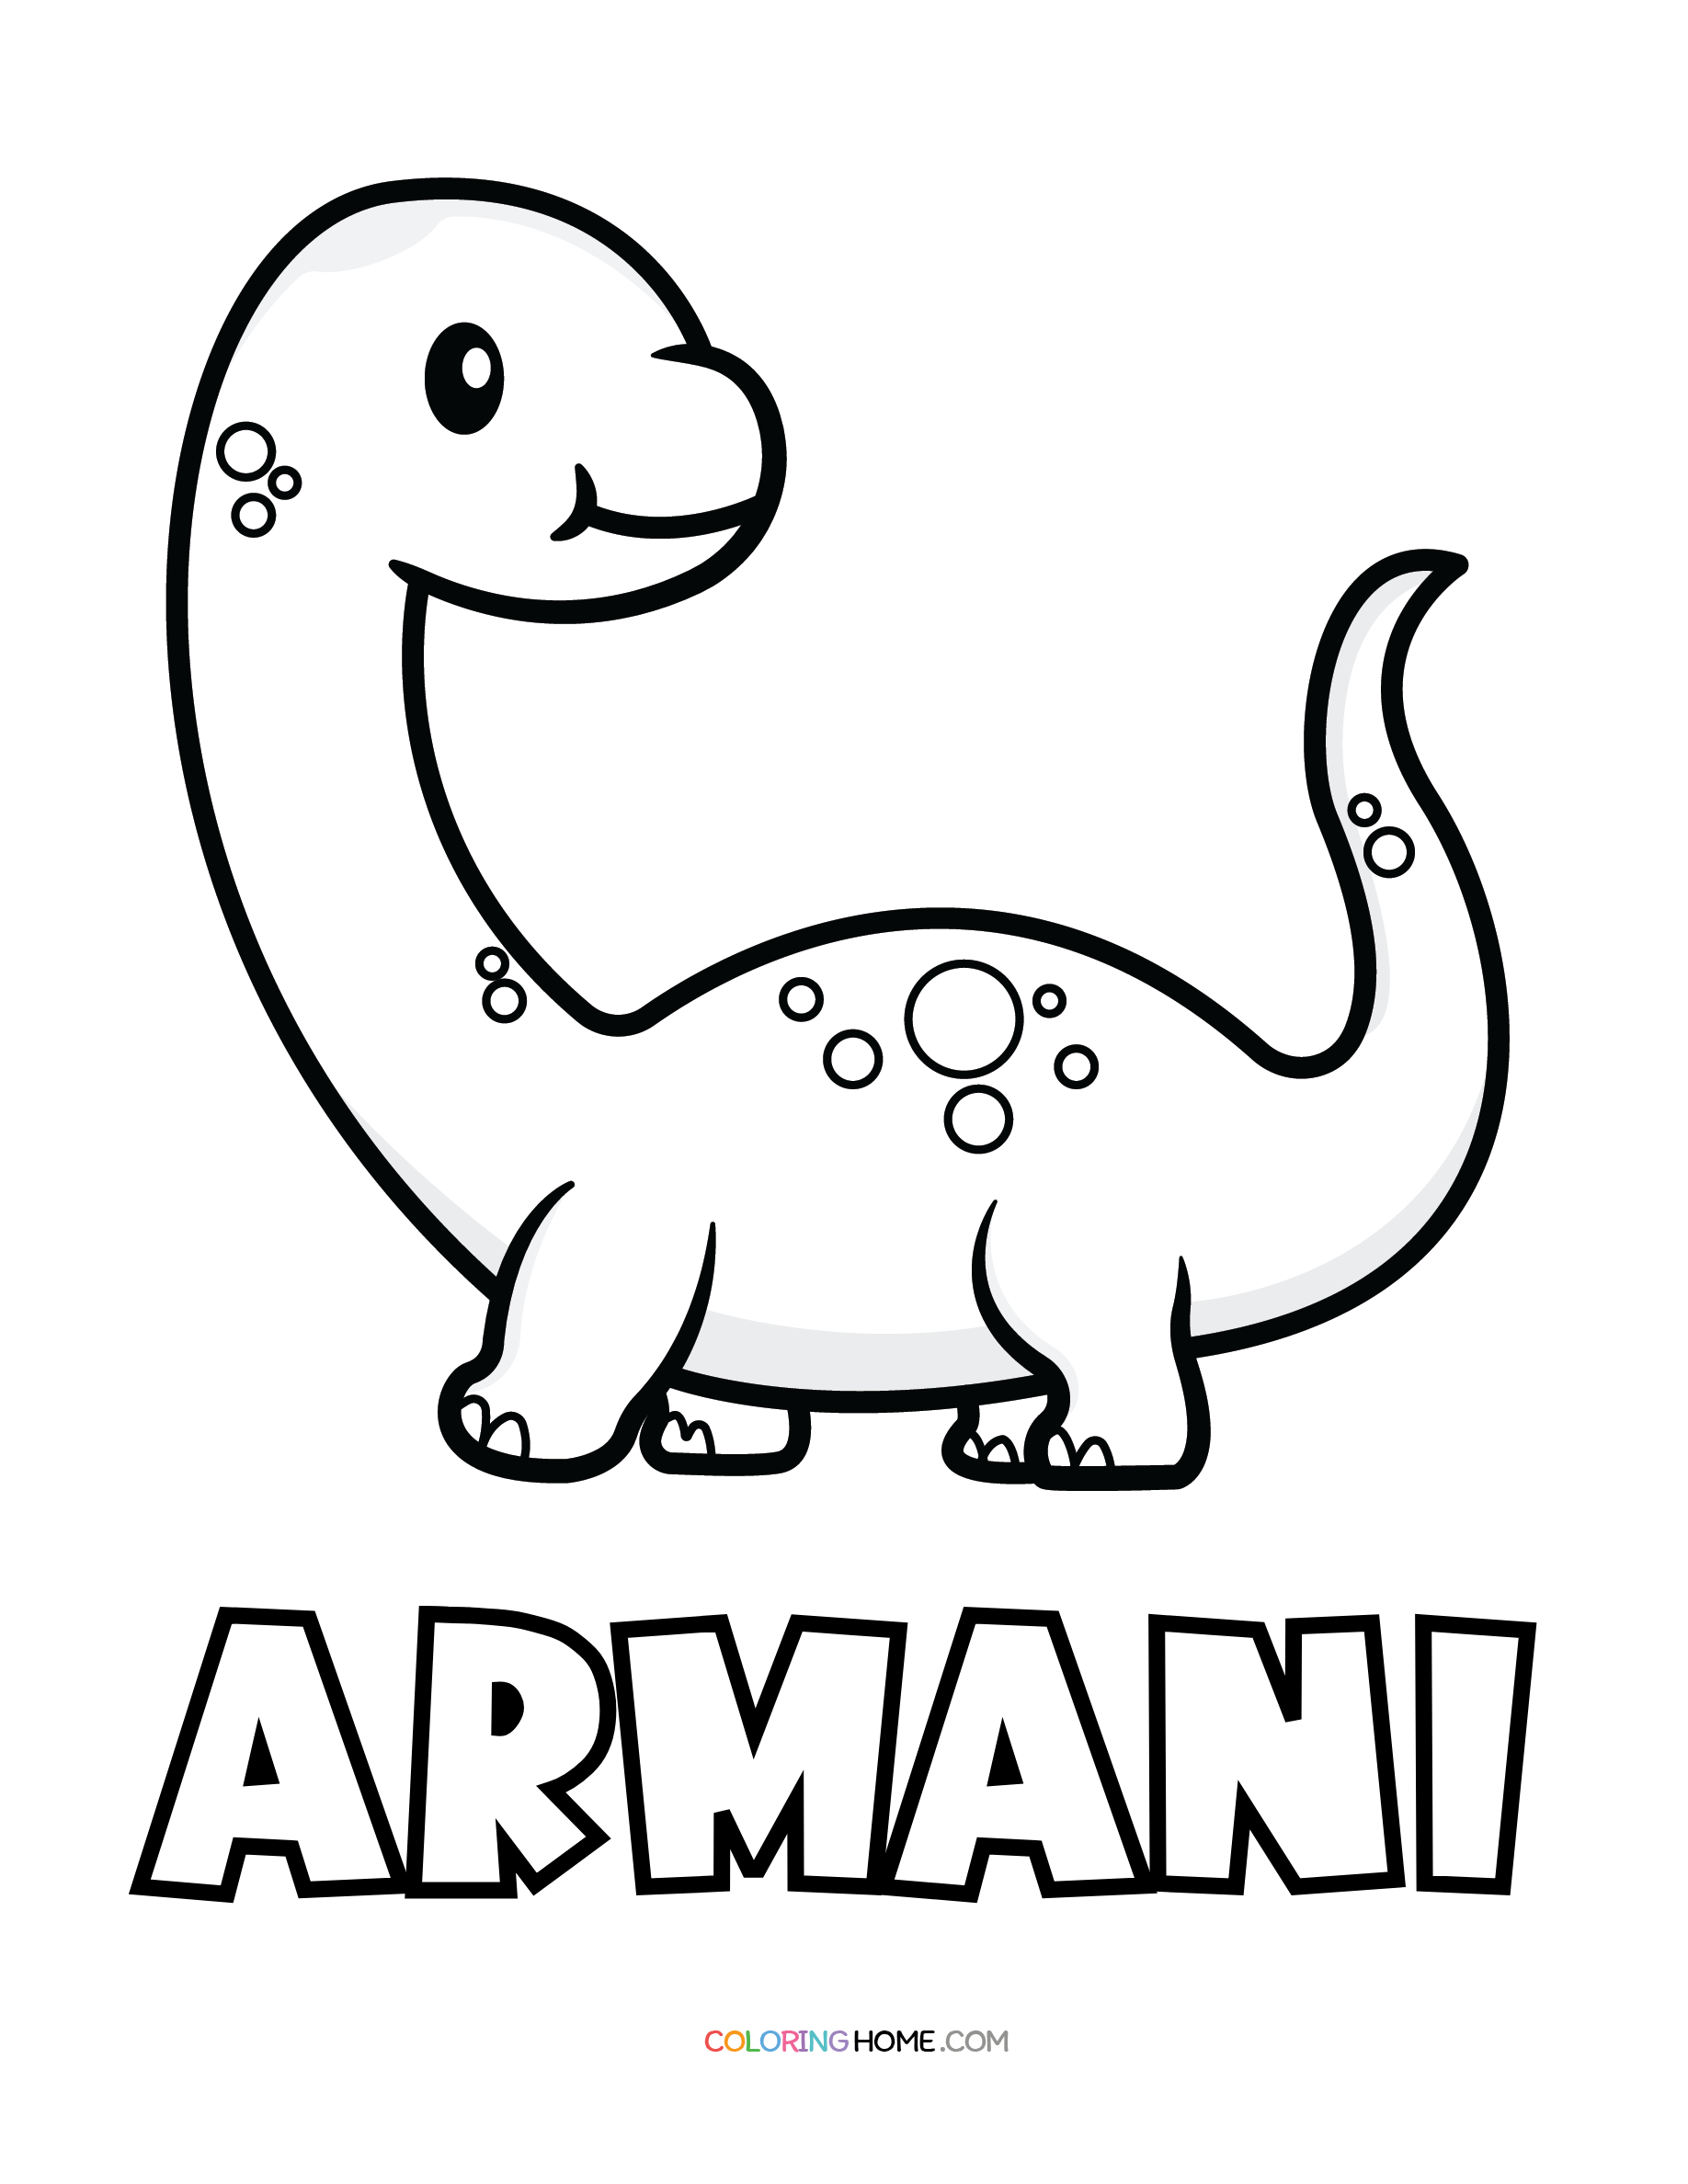 Armani dinosaur coloring page